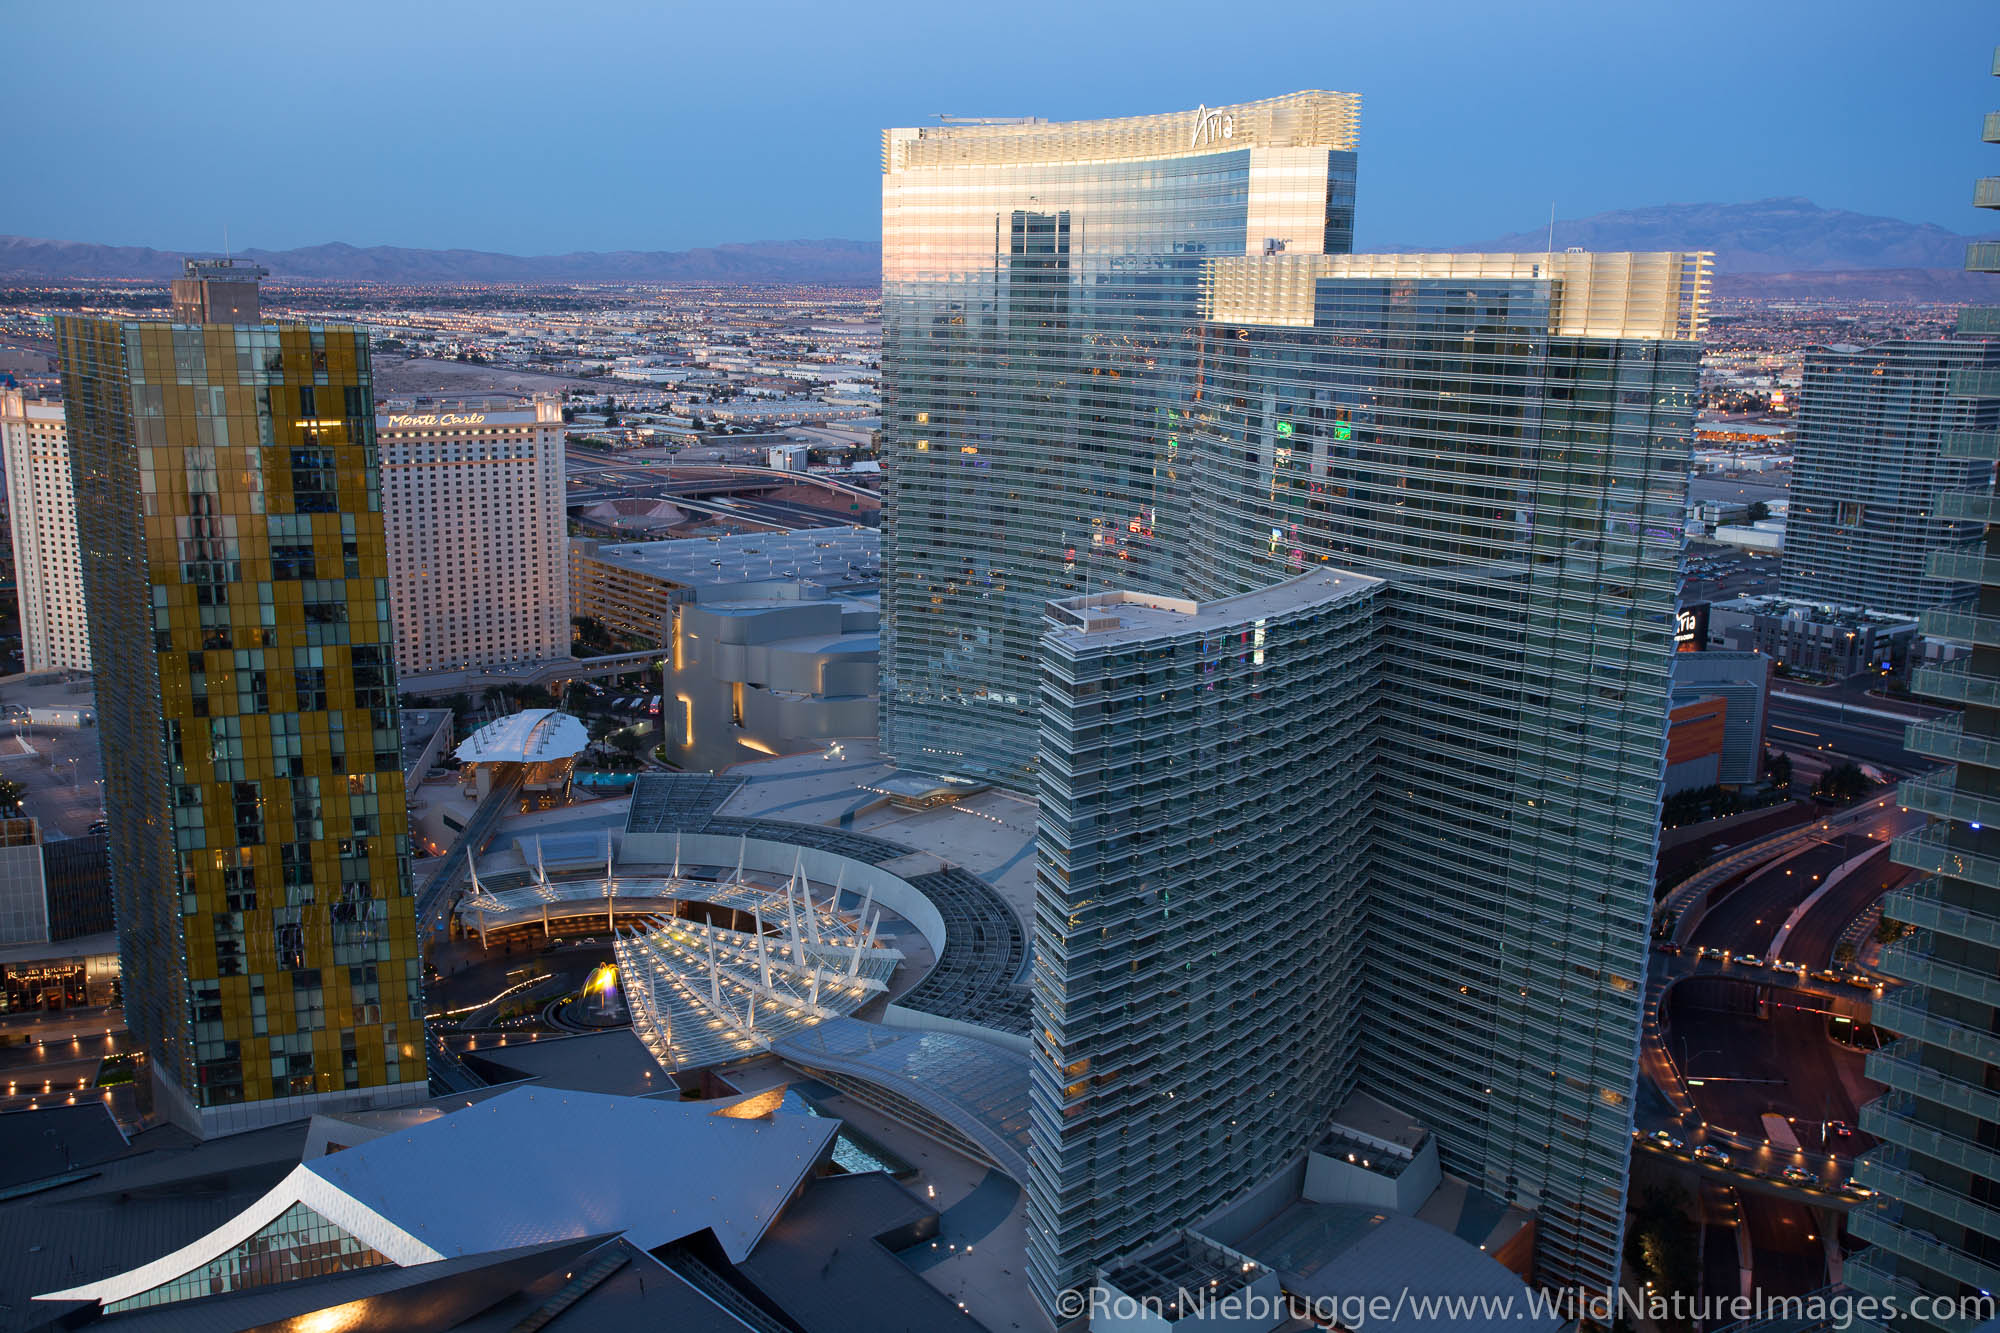 The Aria Hotel and Casino, City Center, Las Vegas, Nevada.